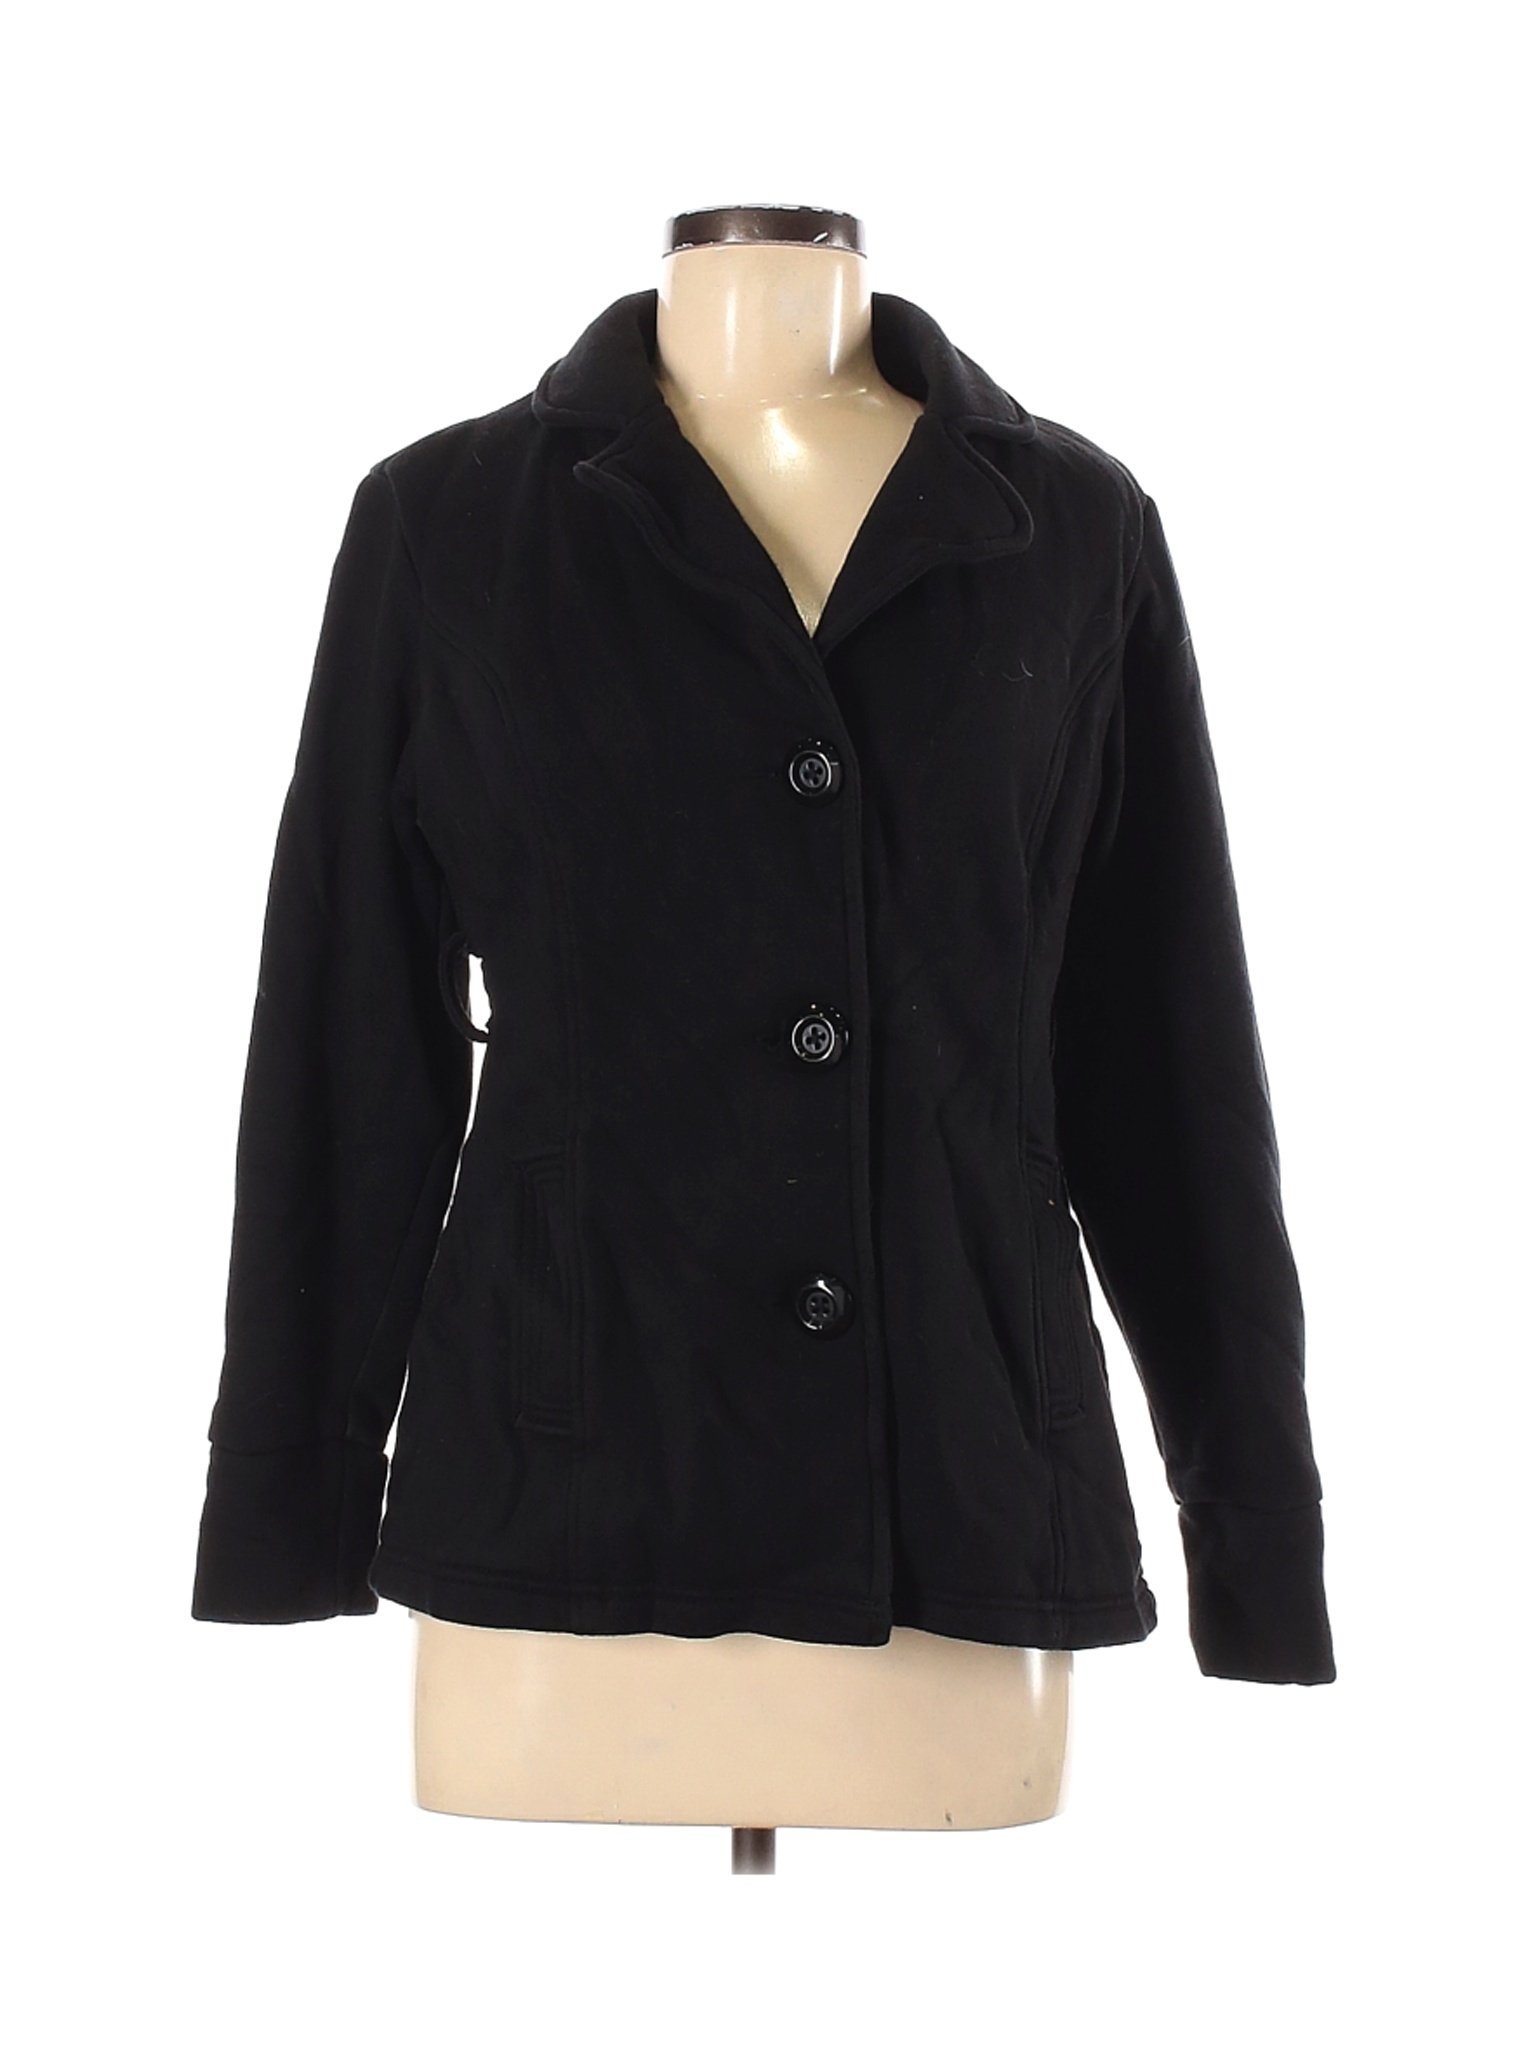 Jones New York Women Black Coat M | eBay